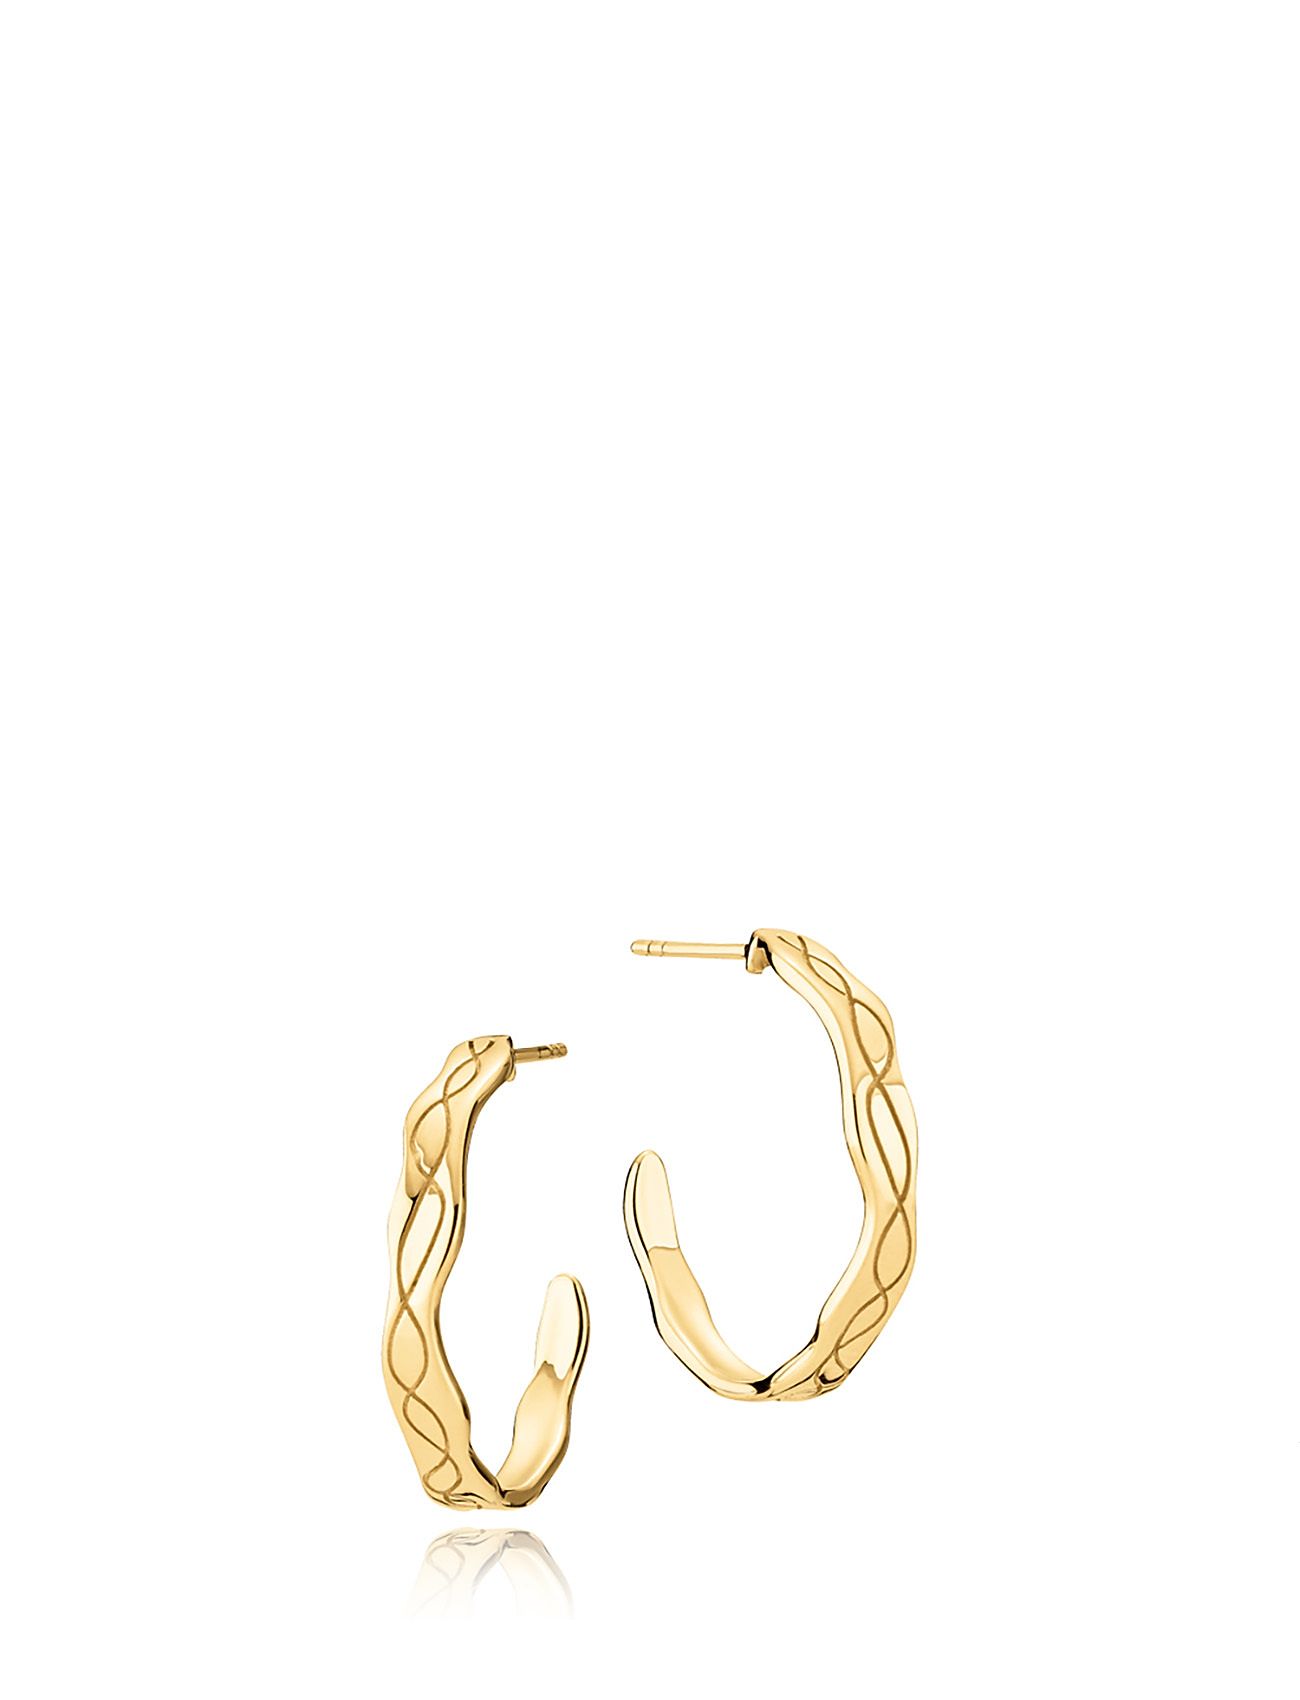 Oline Creoles Accessories Jewellery Earrings Hoops Gold Izabel Camille